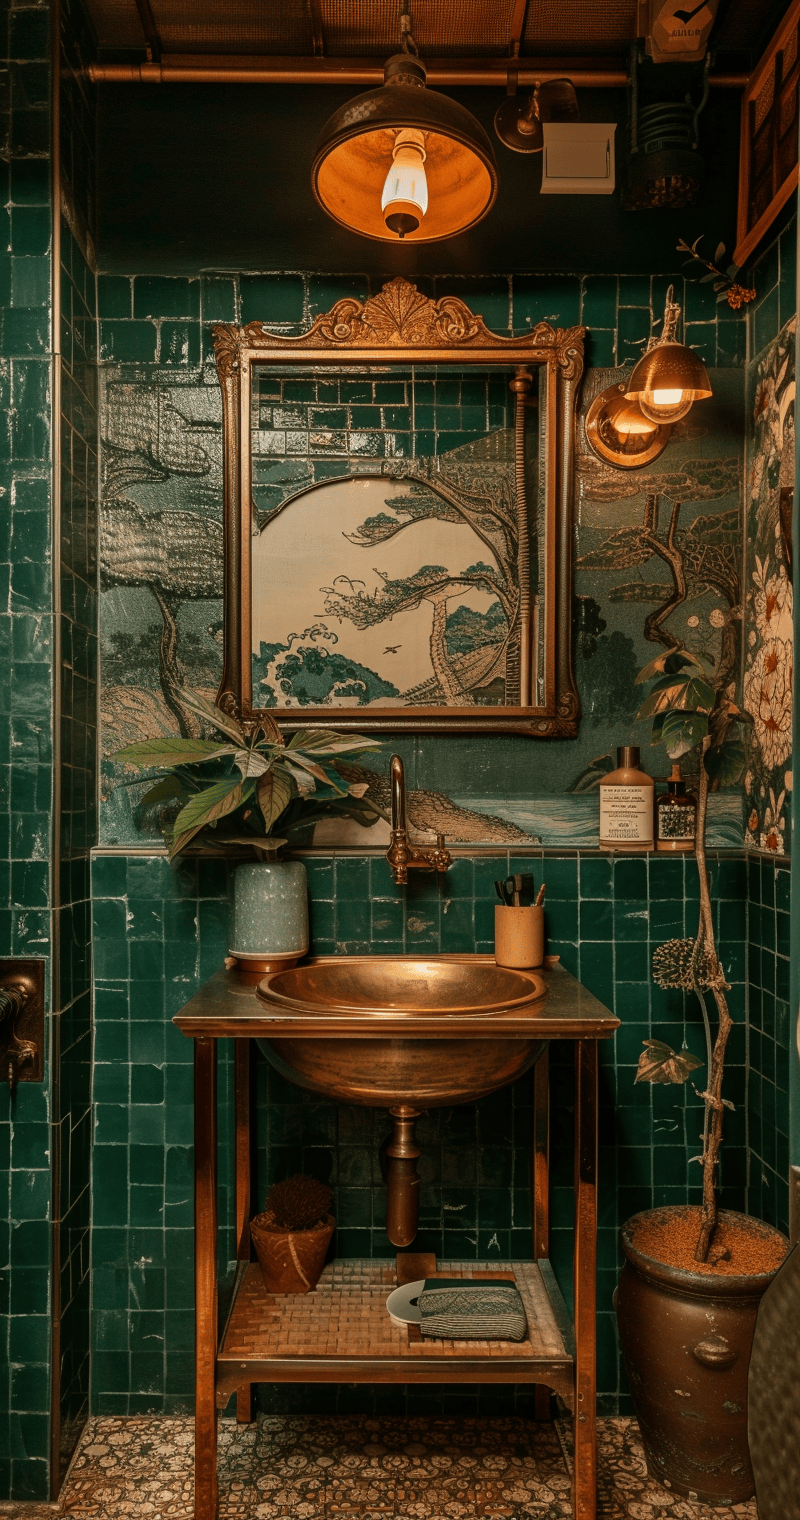 Revival of 70s bathroom decor ideas for a retro masterpiece transformation